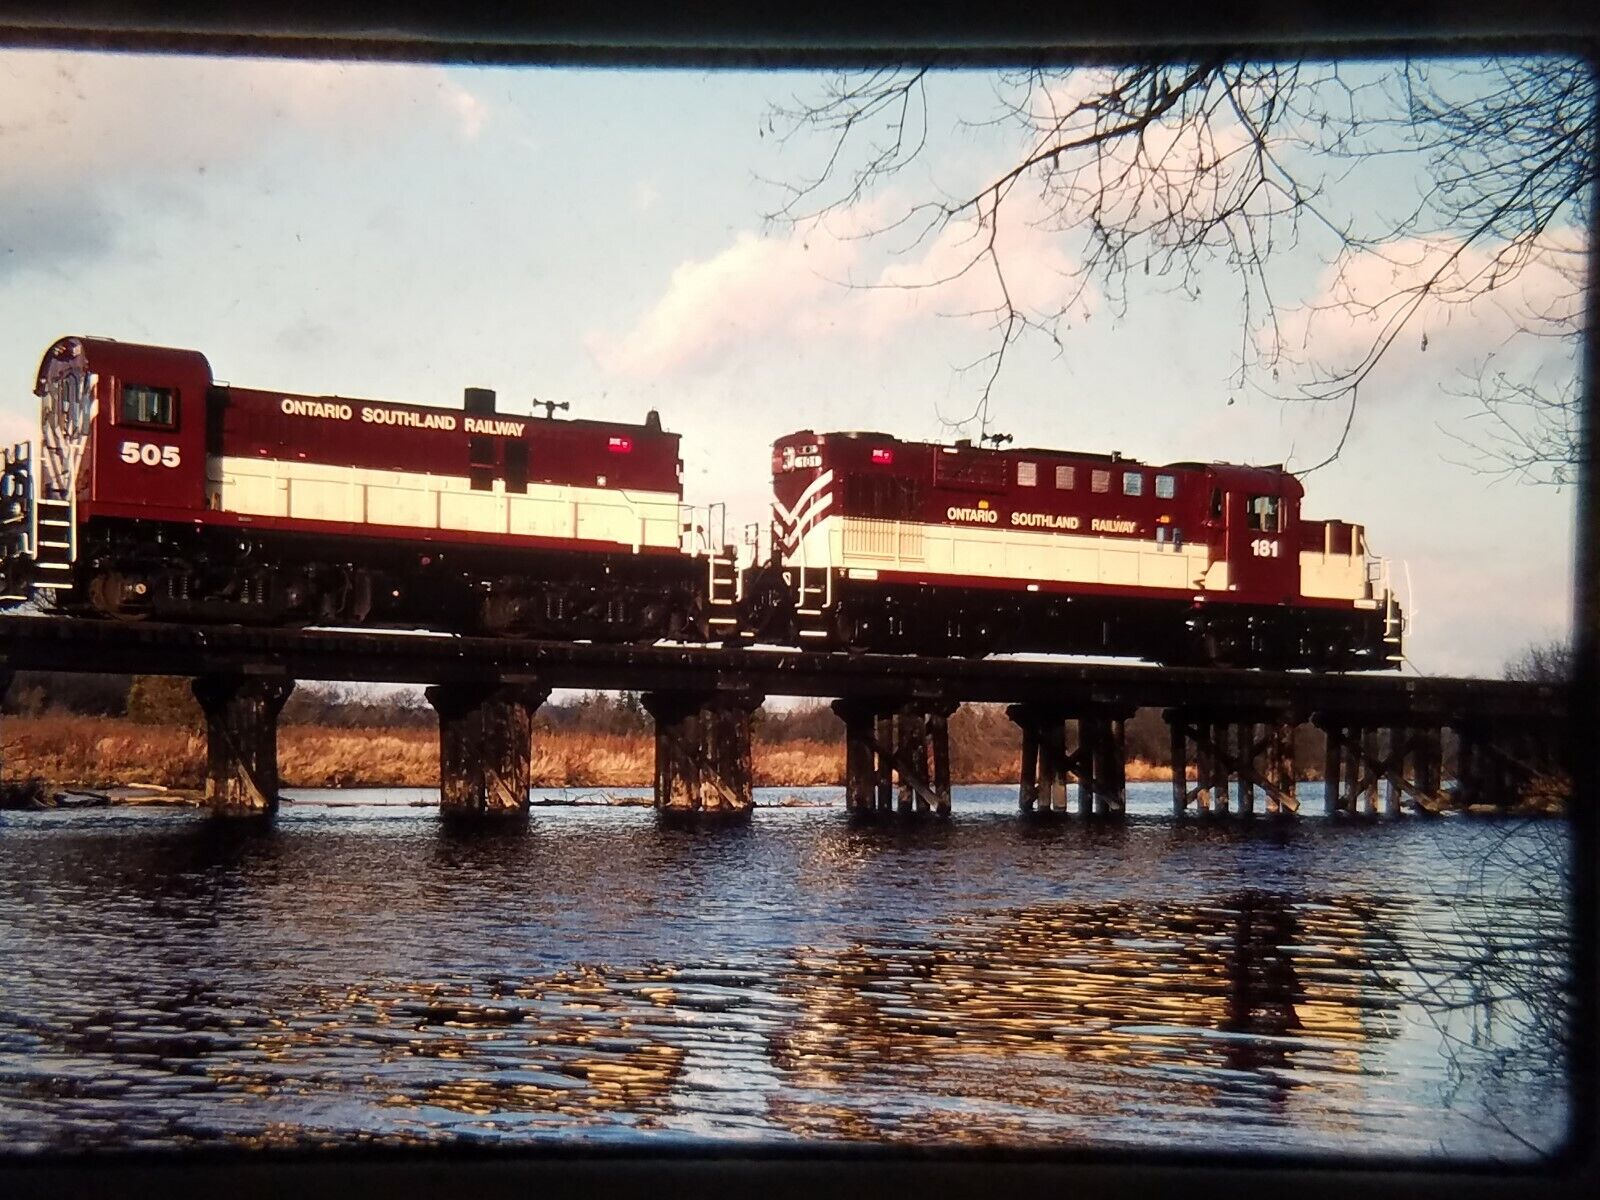 XS01 TRAIN SLIDE Railroad Short Line Ontario Southland Railway 505